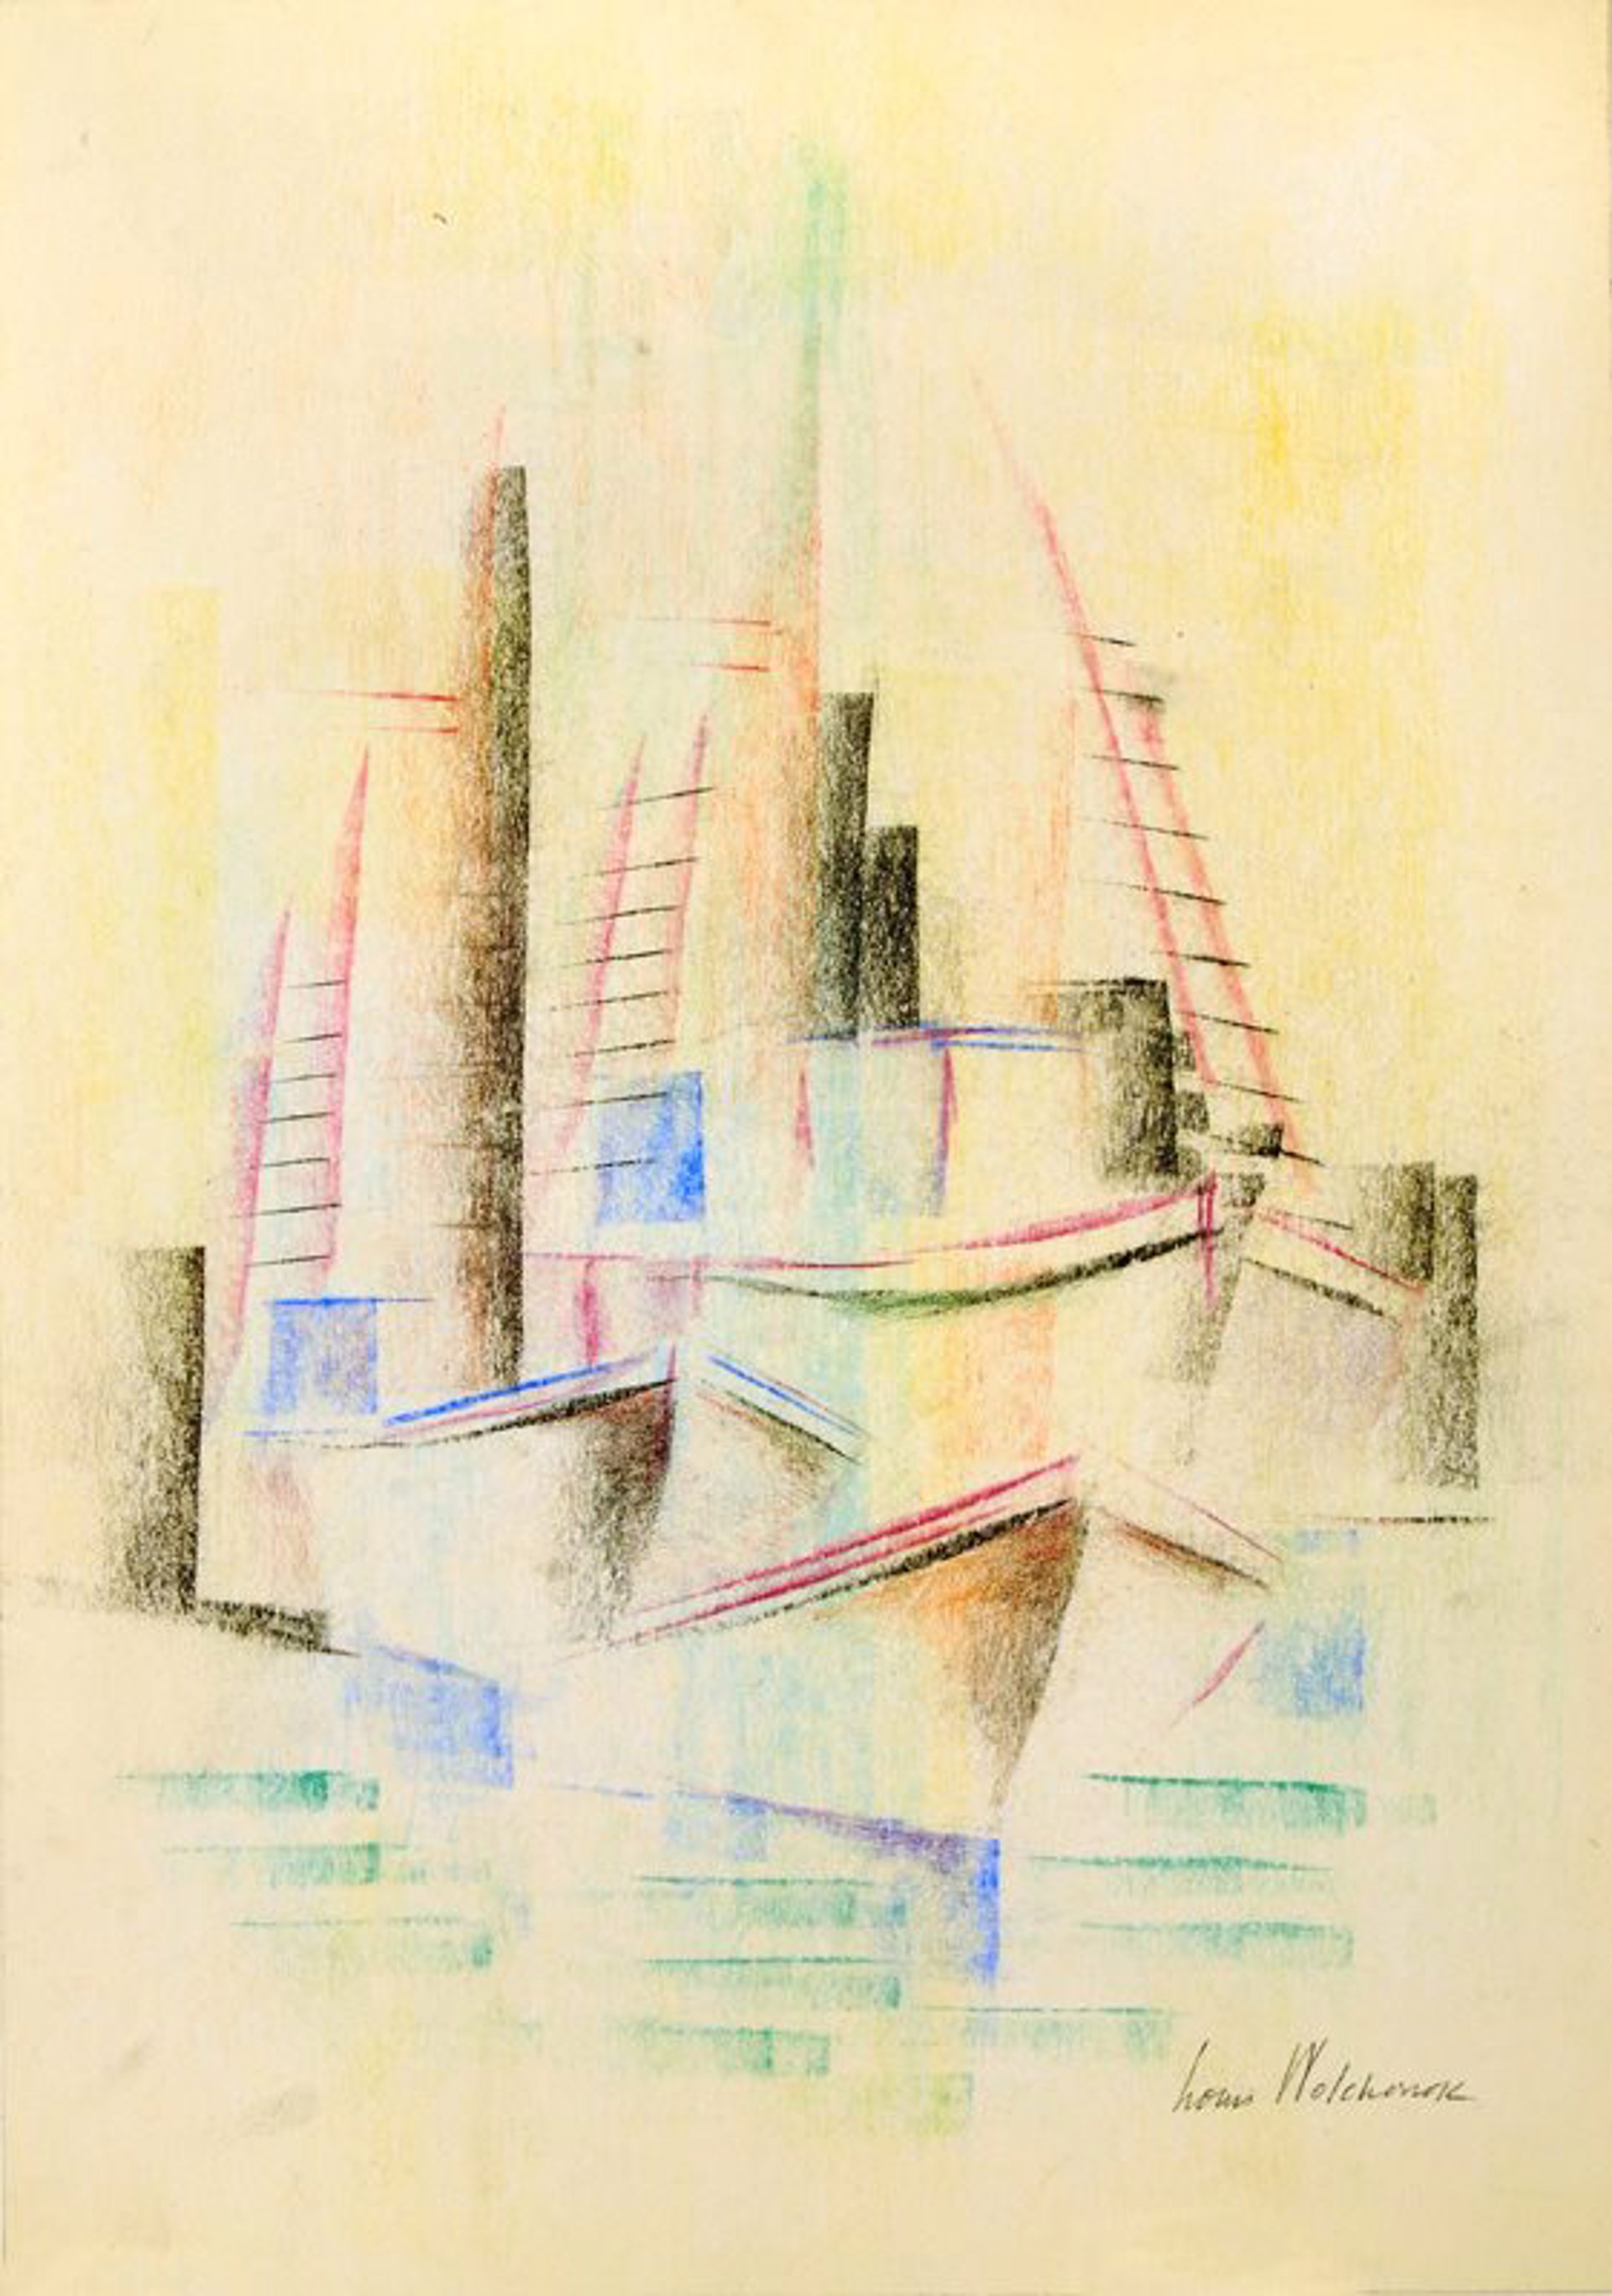 Boat Bows, est. 1940 by Louis Wolchonok